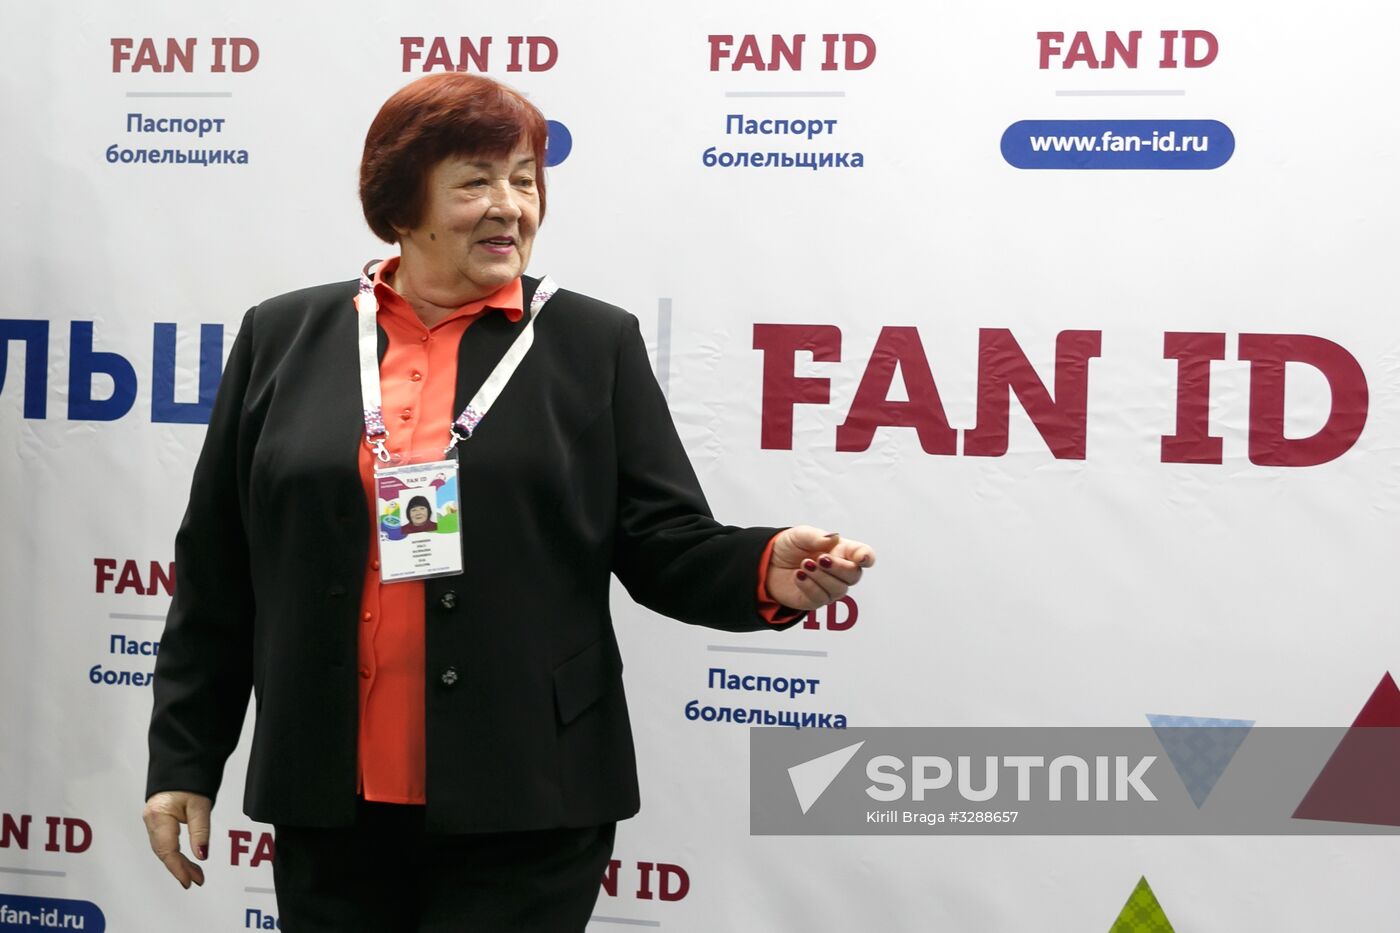 2018 FIFA World Cup FAN ID distribution center opens in Volgograd